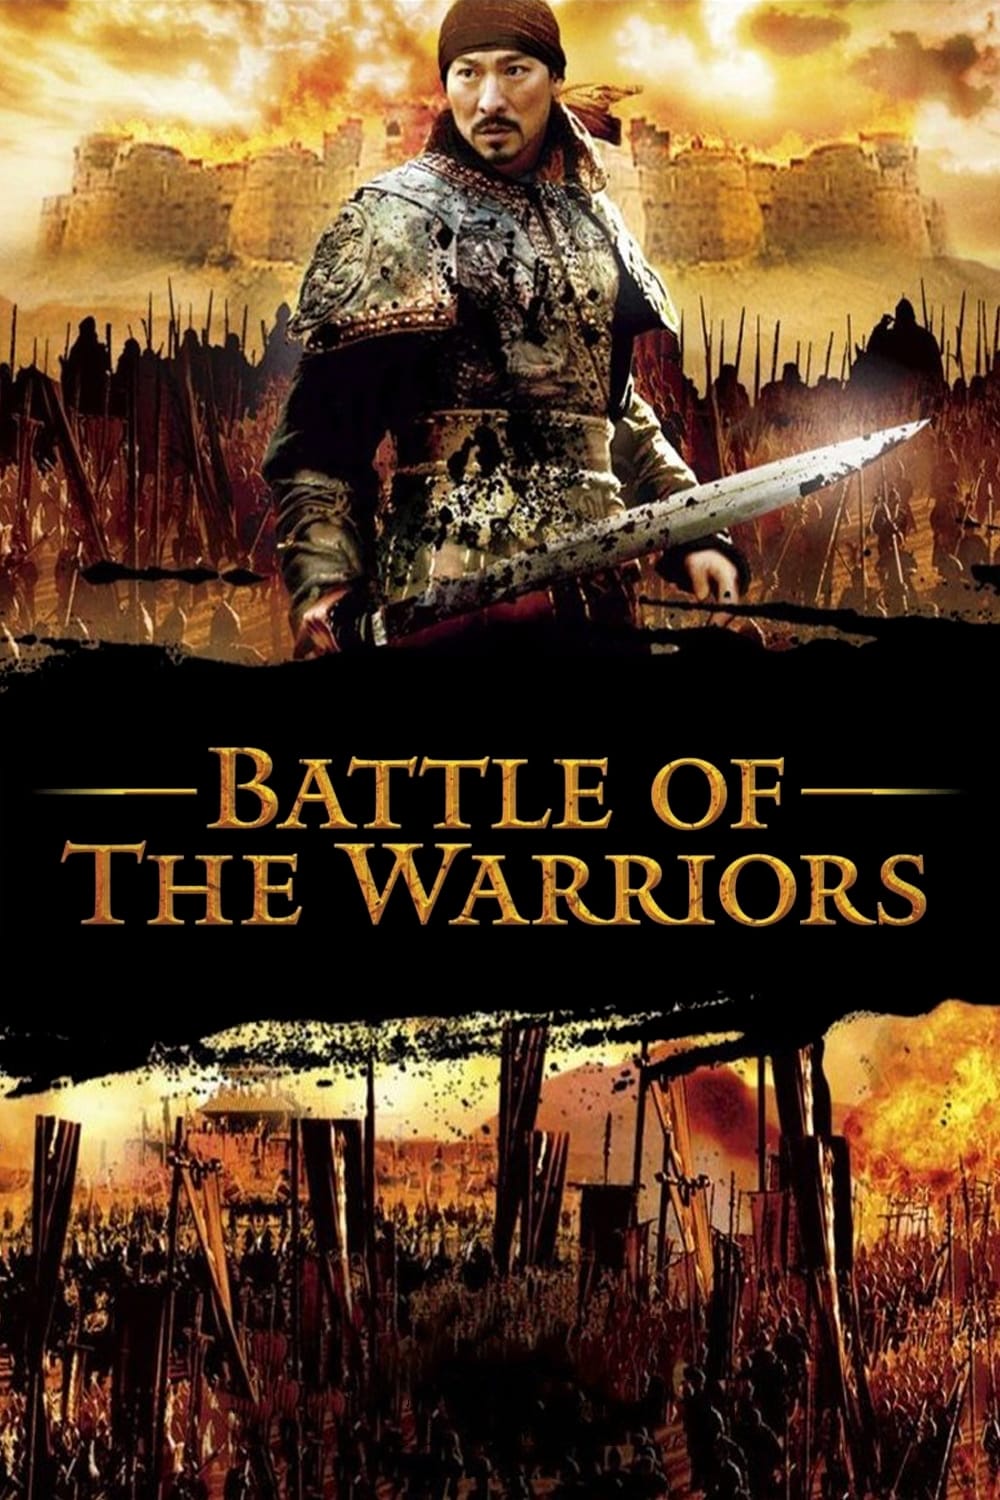 Battle of Kingdoms - Festung der Helden (2006)